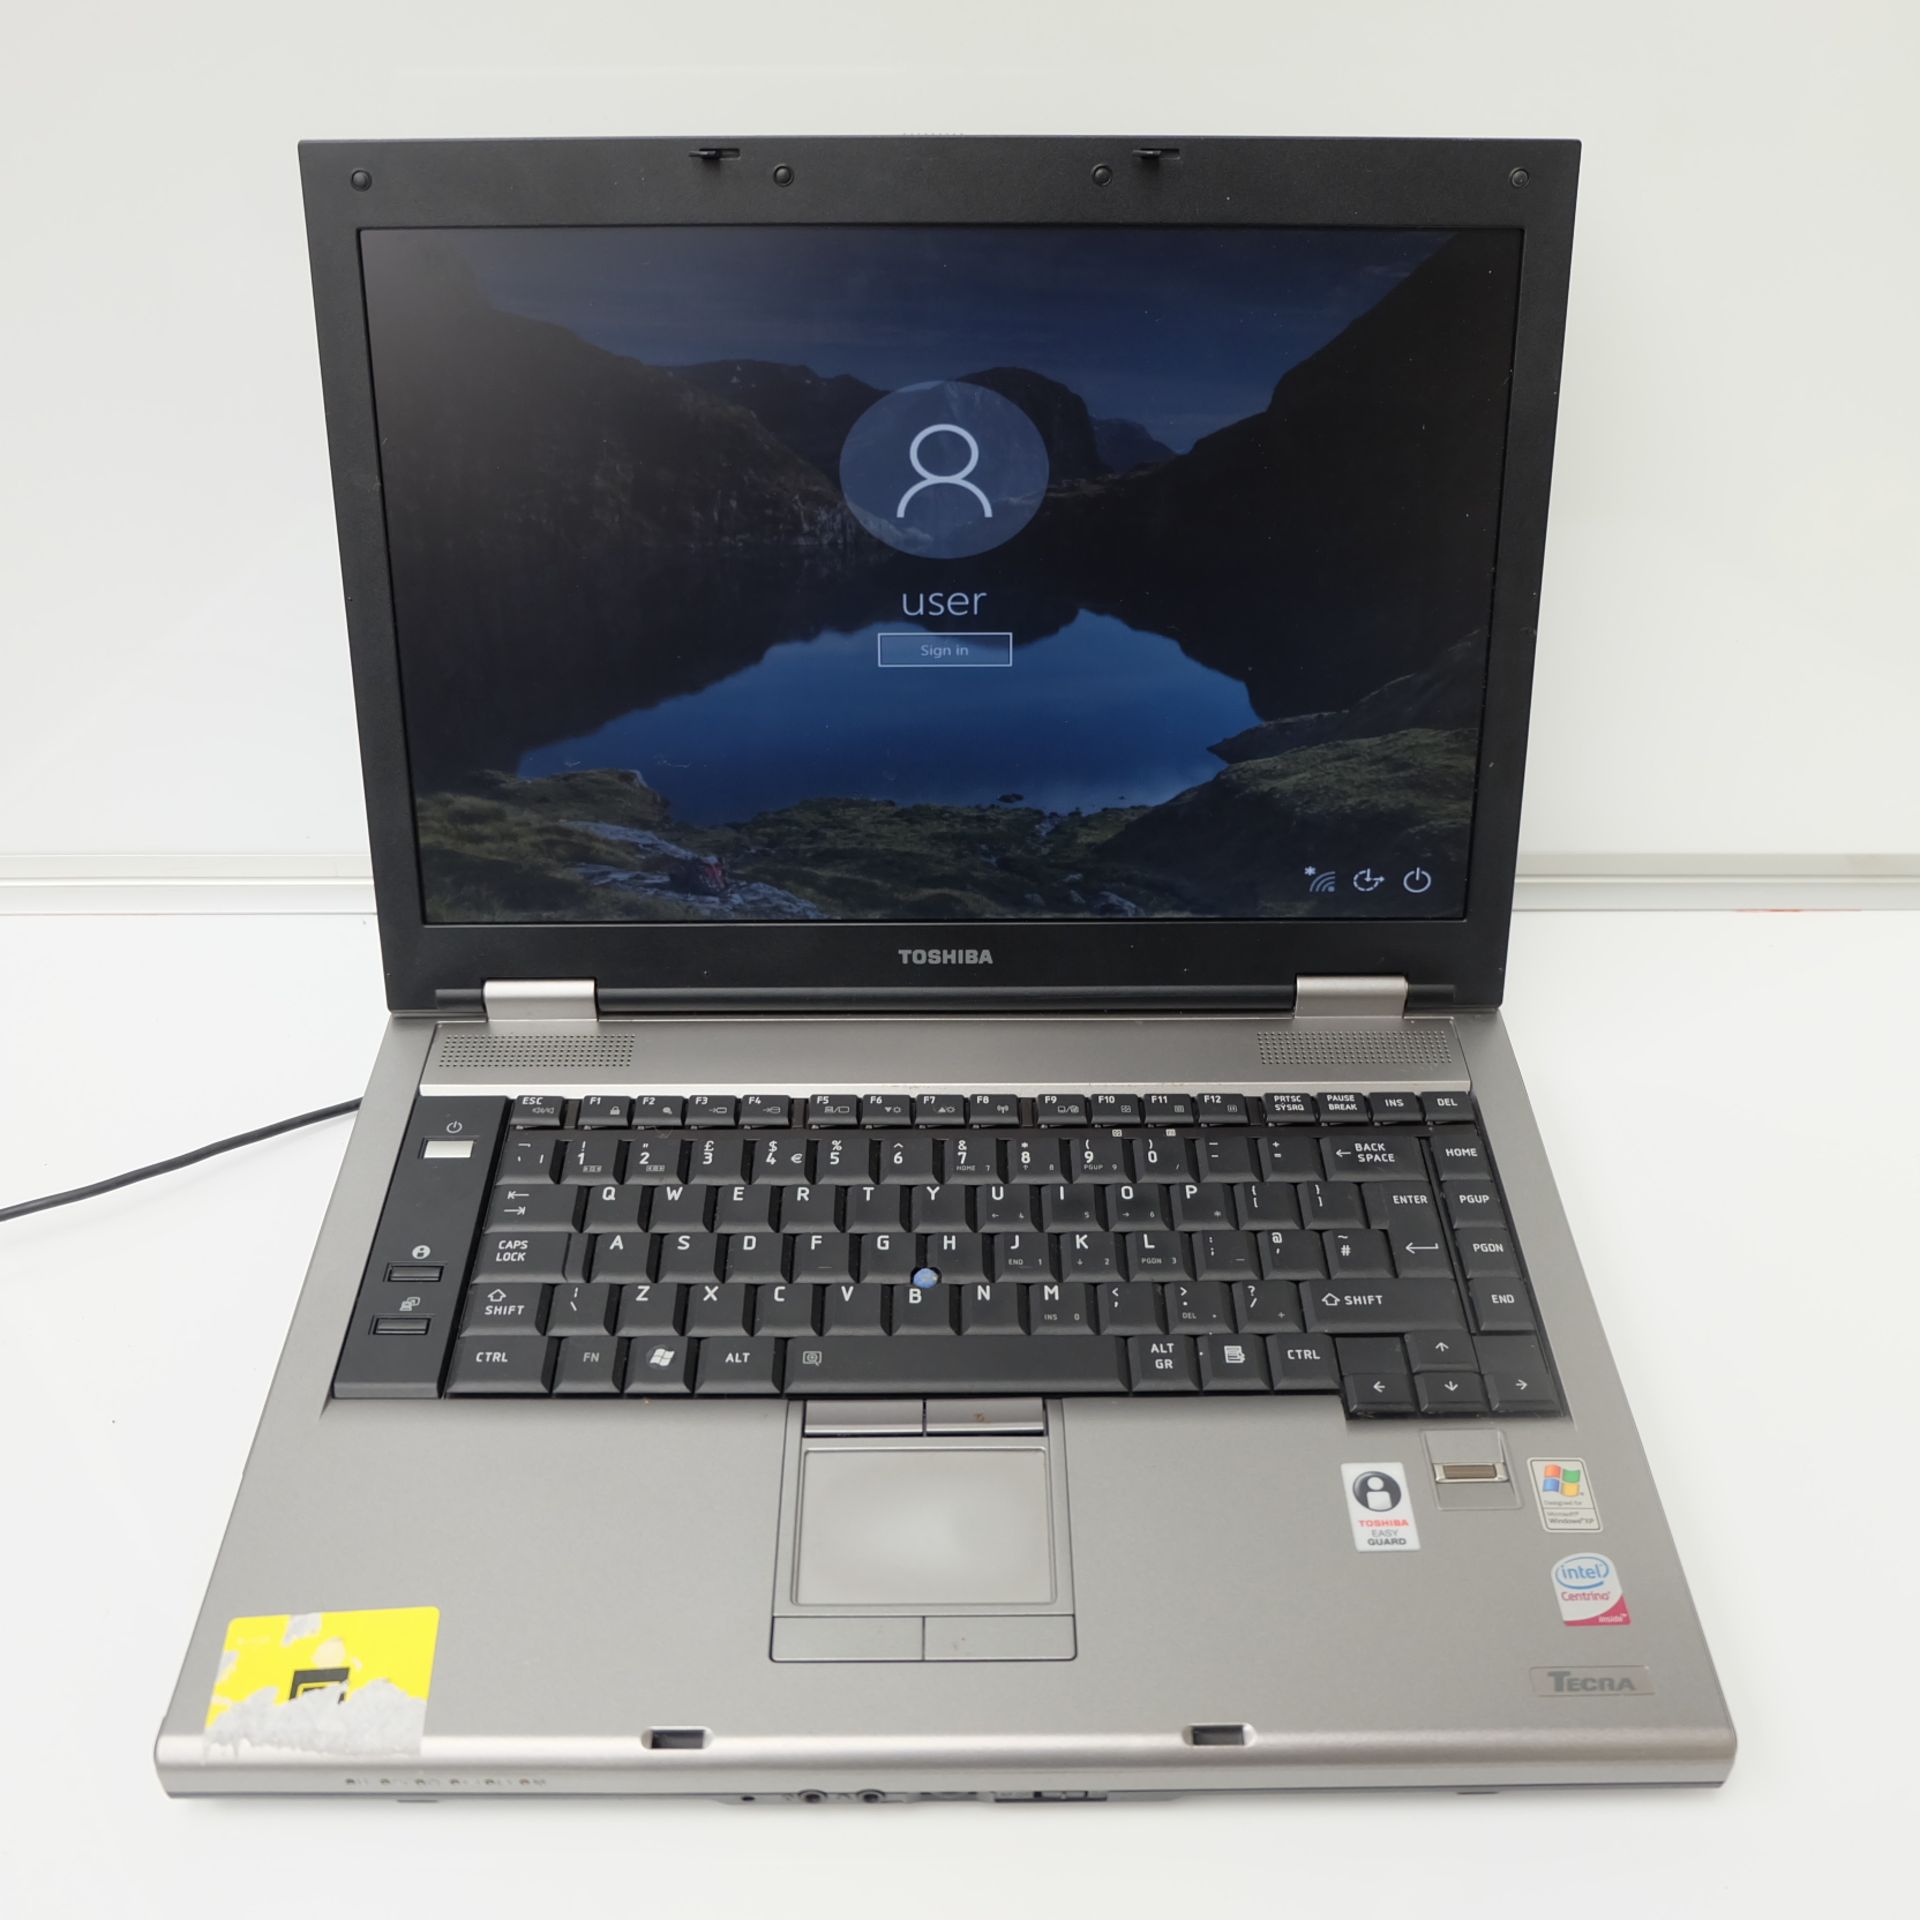 Toshiba Tecra A9 Model PTS52E Laptop. 1.8 GHZ Intel Centrino Core 2. Screensize 15.4".